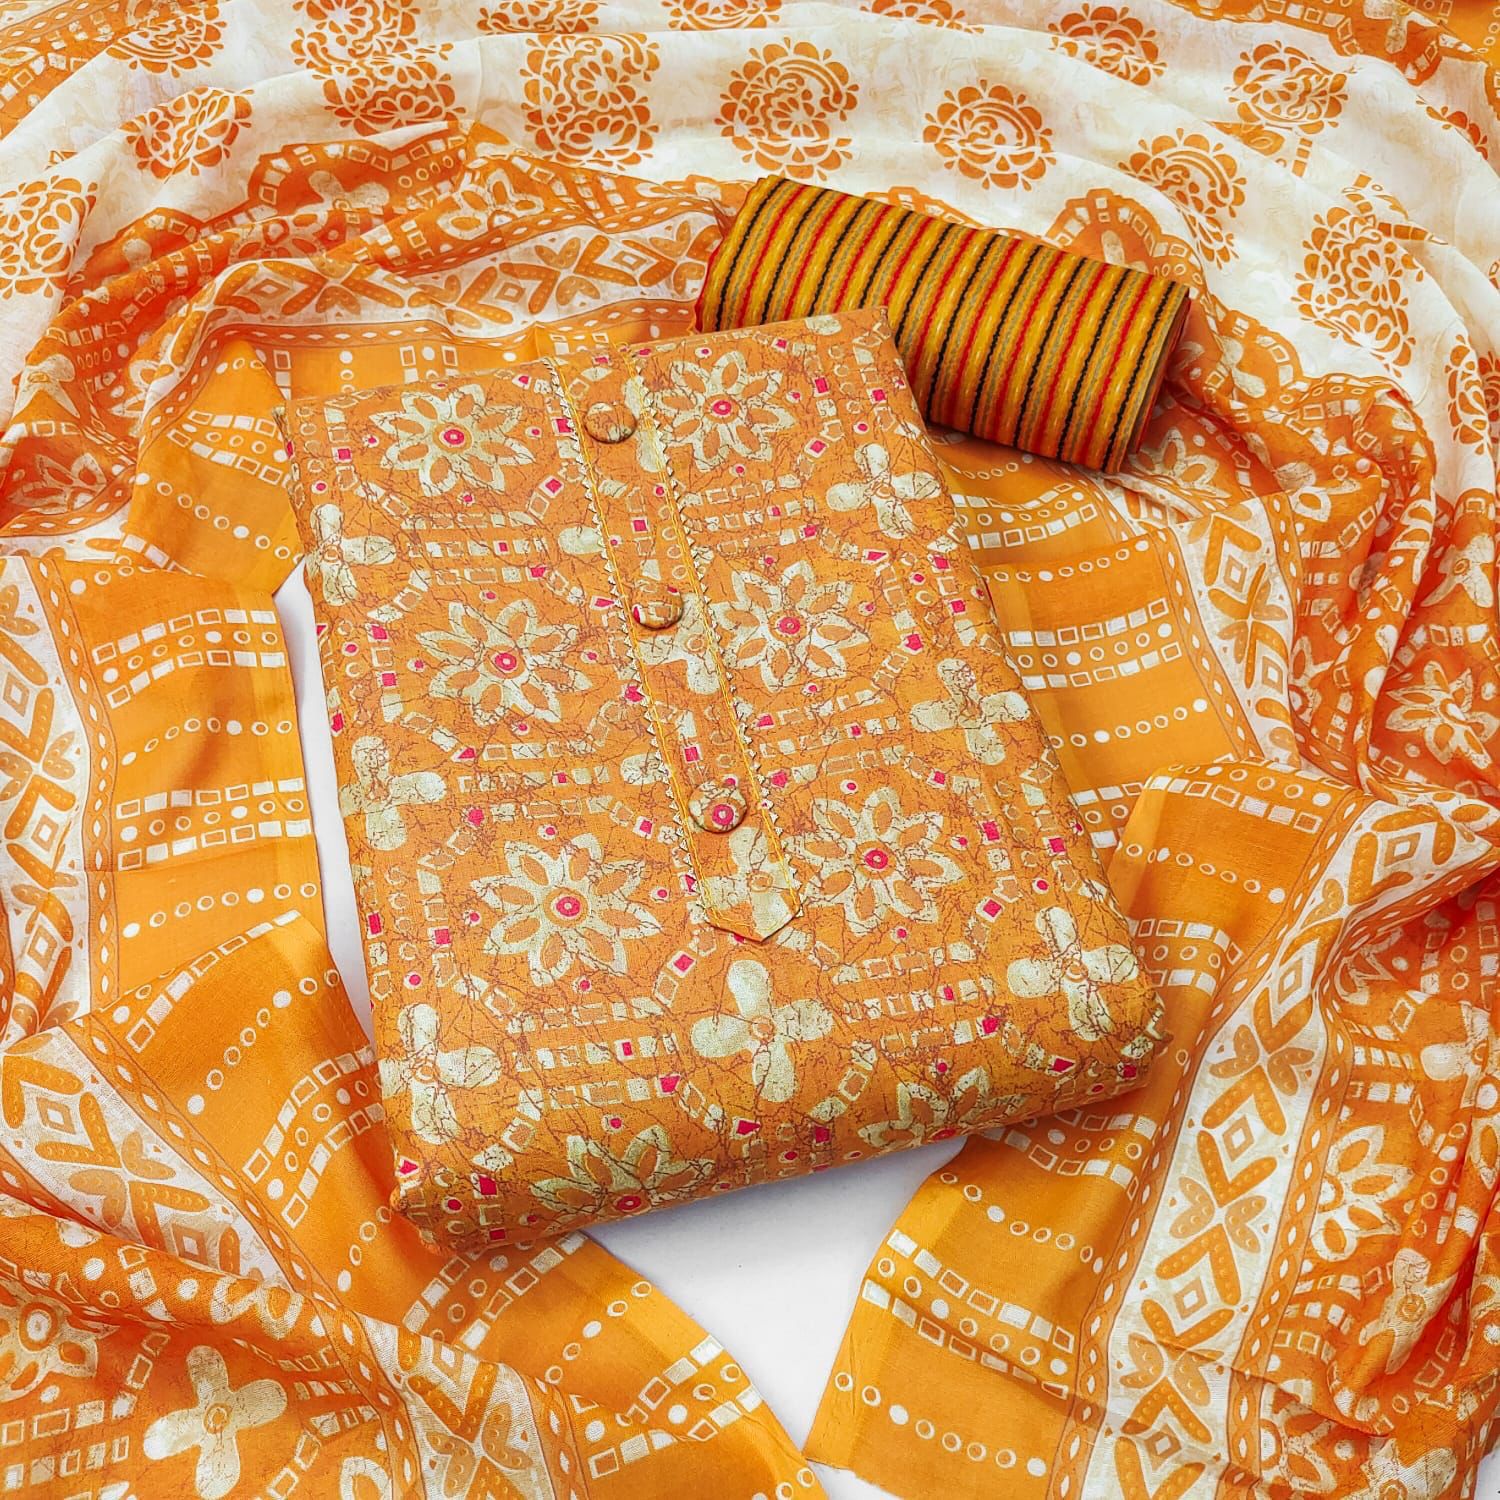 Fashionmart Floral Printed Cotton Cloth Materiel Natural Fabric Running  Jaipuri Hand Block Printed Women Dress Material Kurtis Natural 44